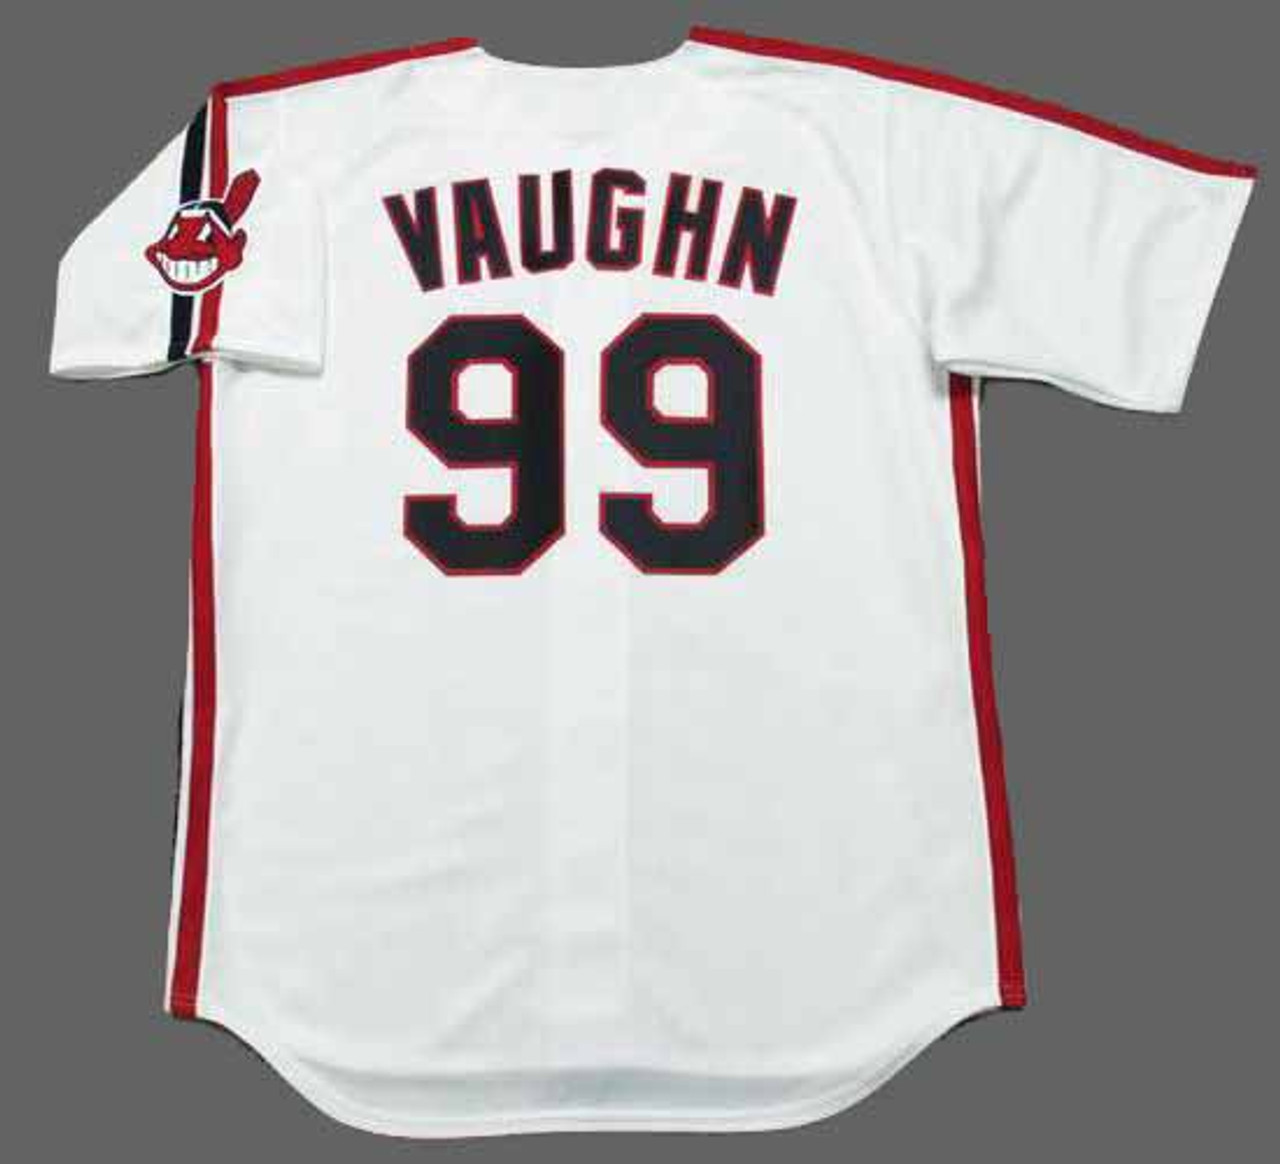 Rick Vaughn Cleveland Indians Major League movie jersey